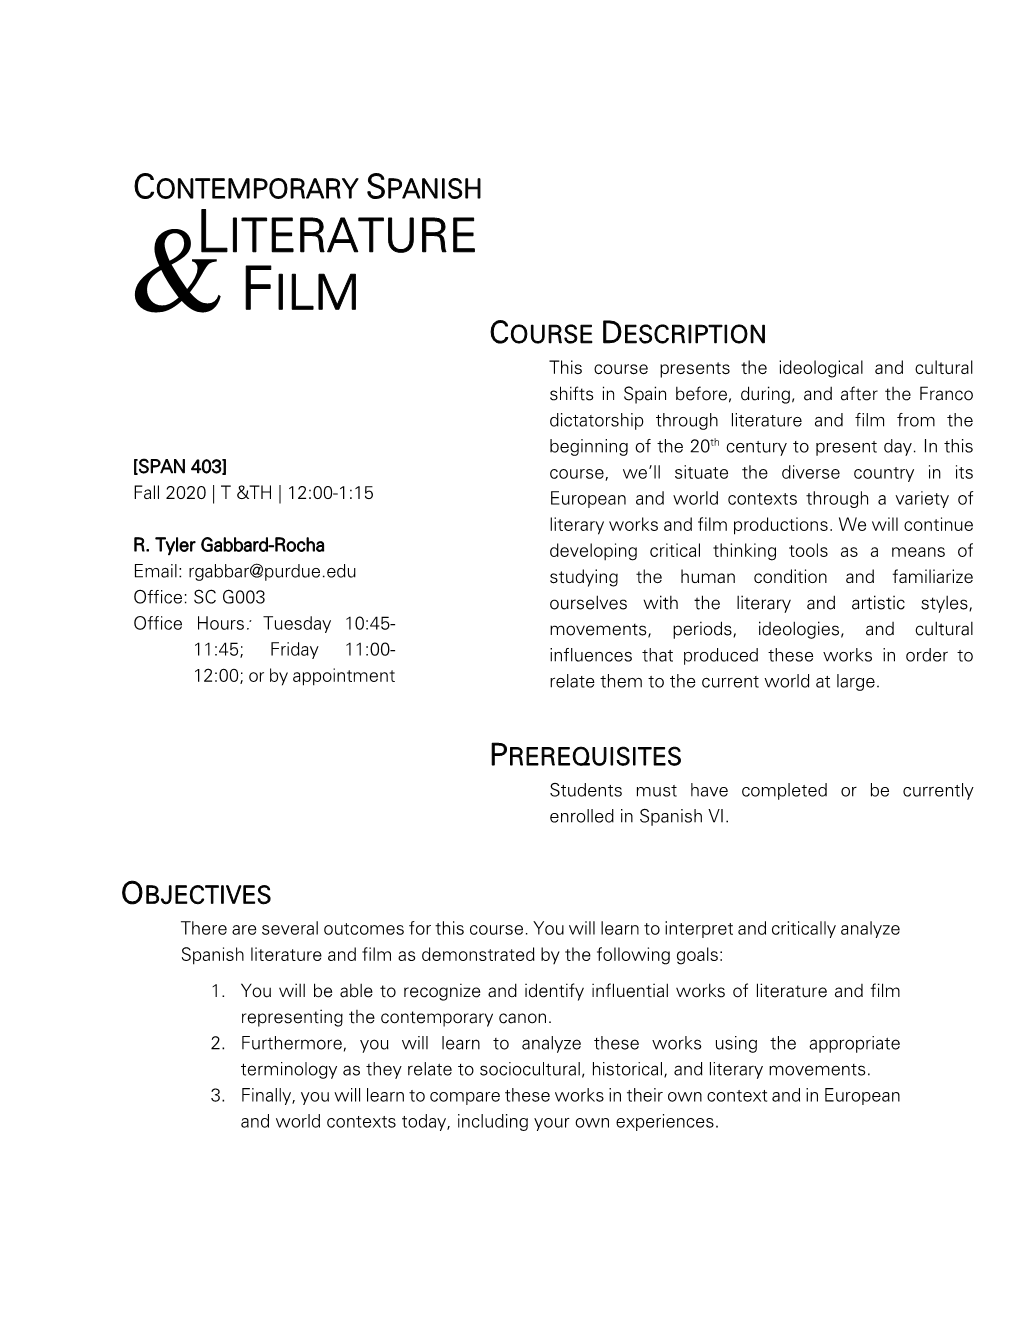 Literature Film & Course Description